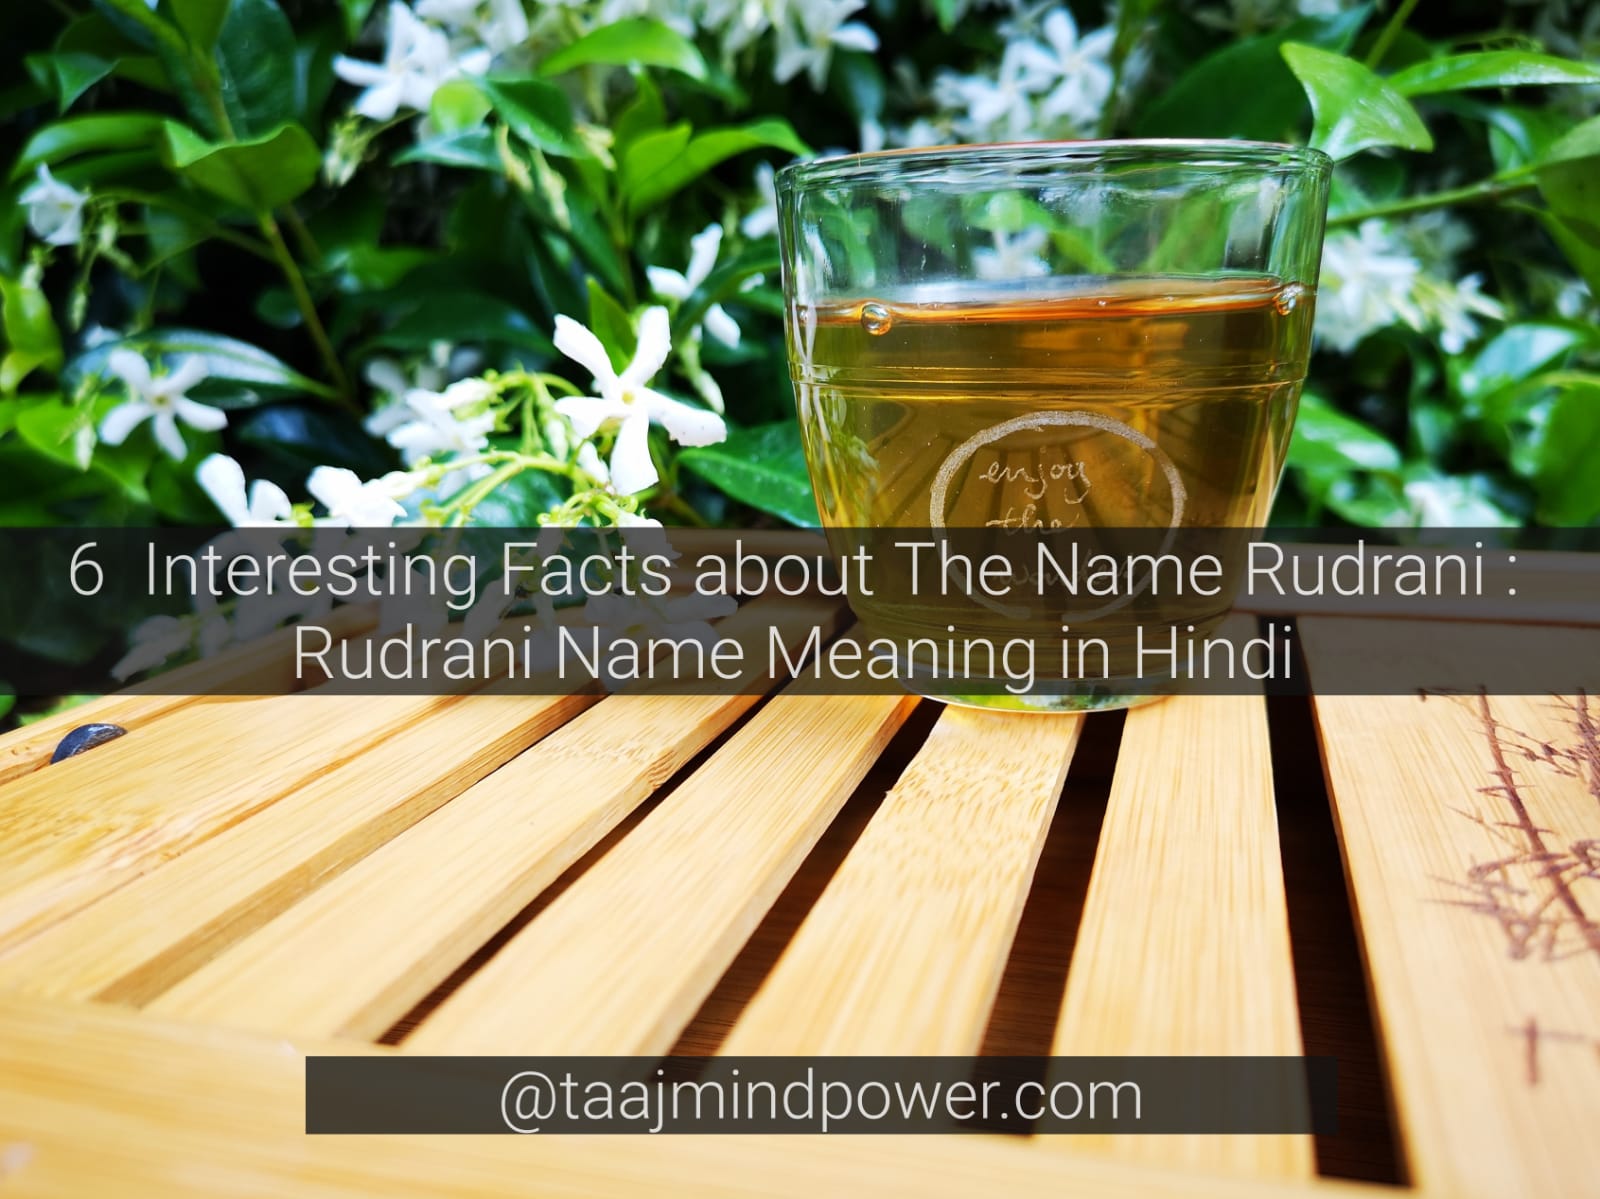 Rudrani Name Meaning in Hindi